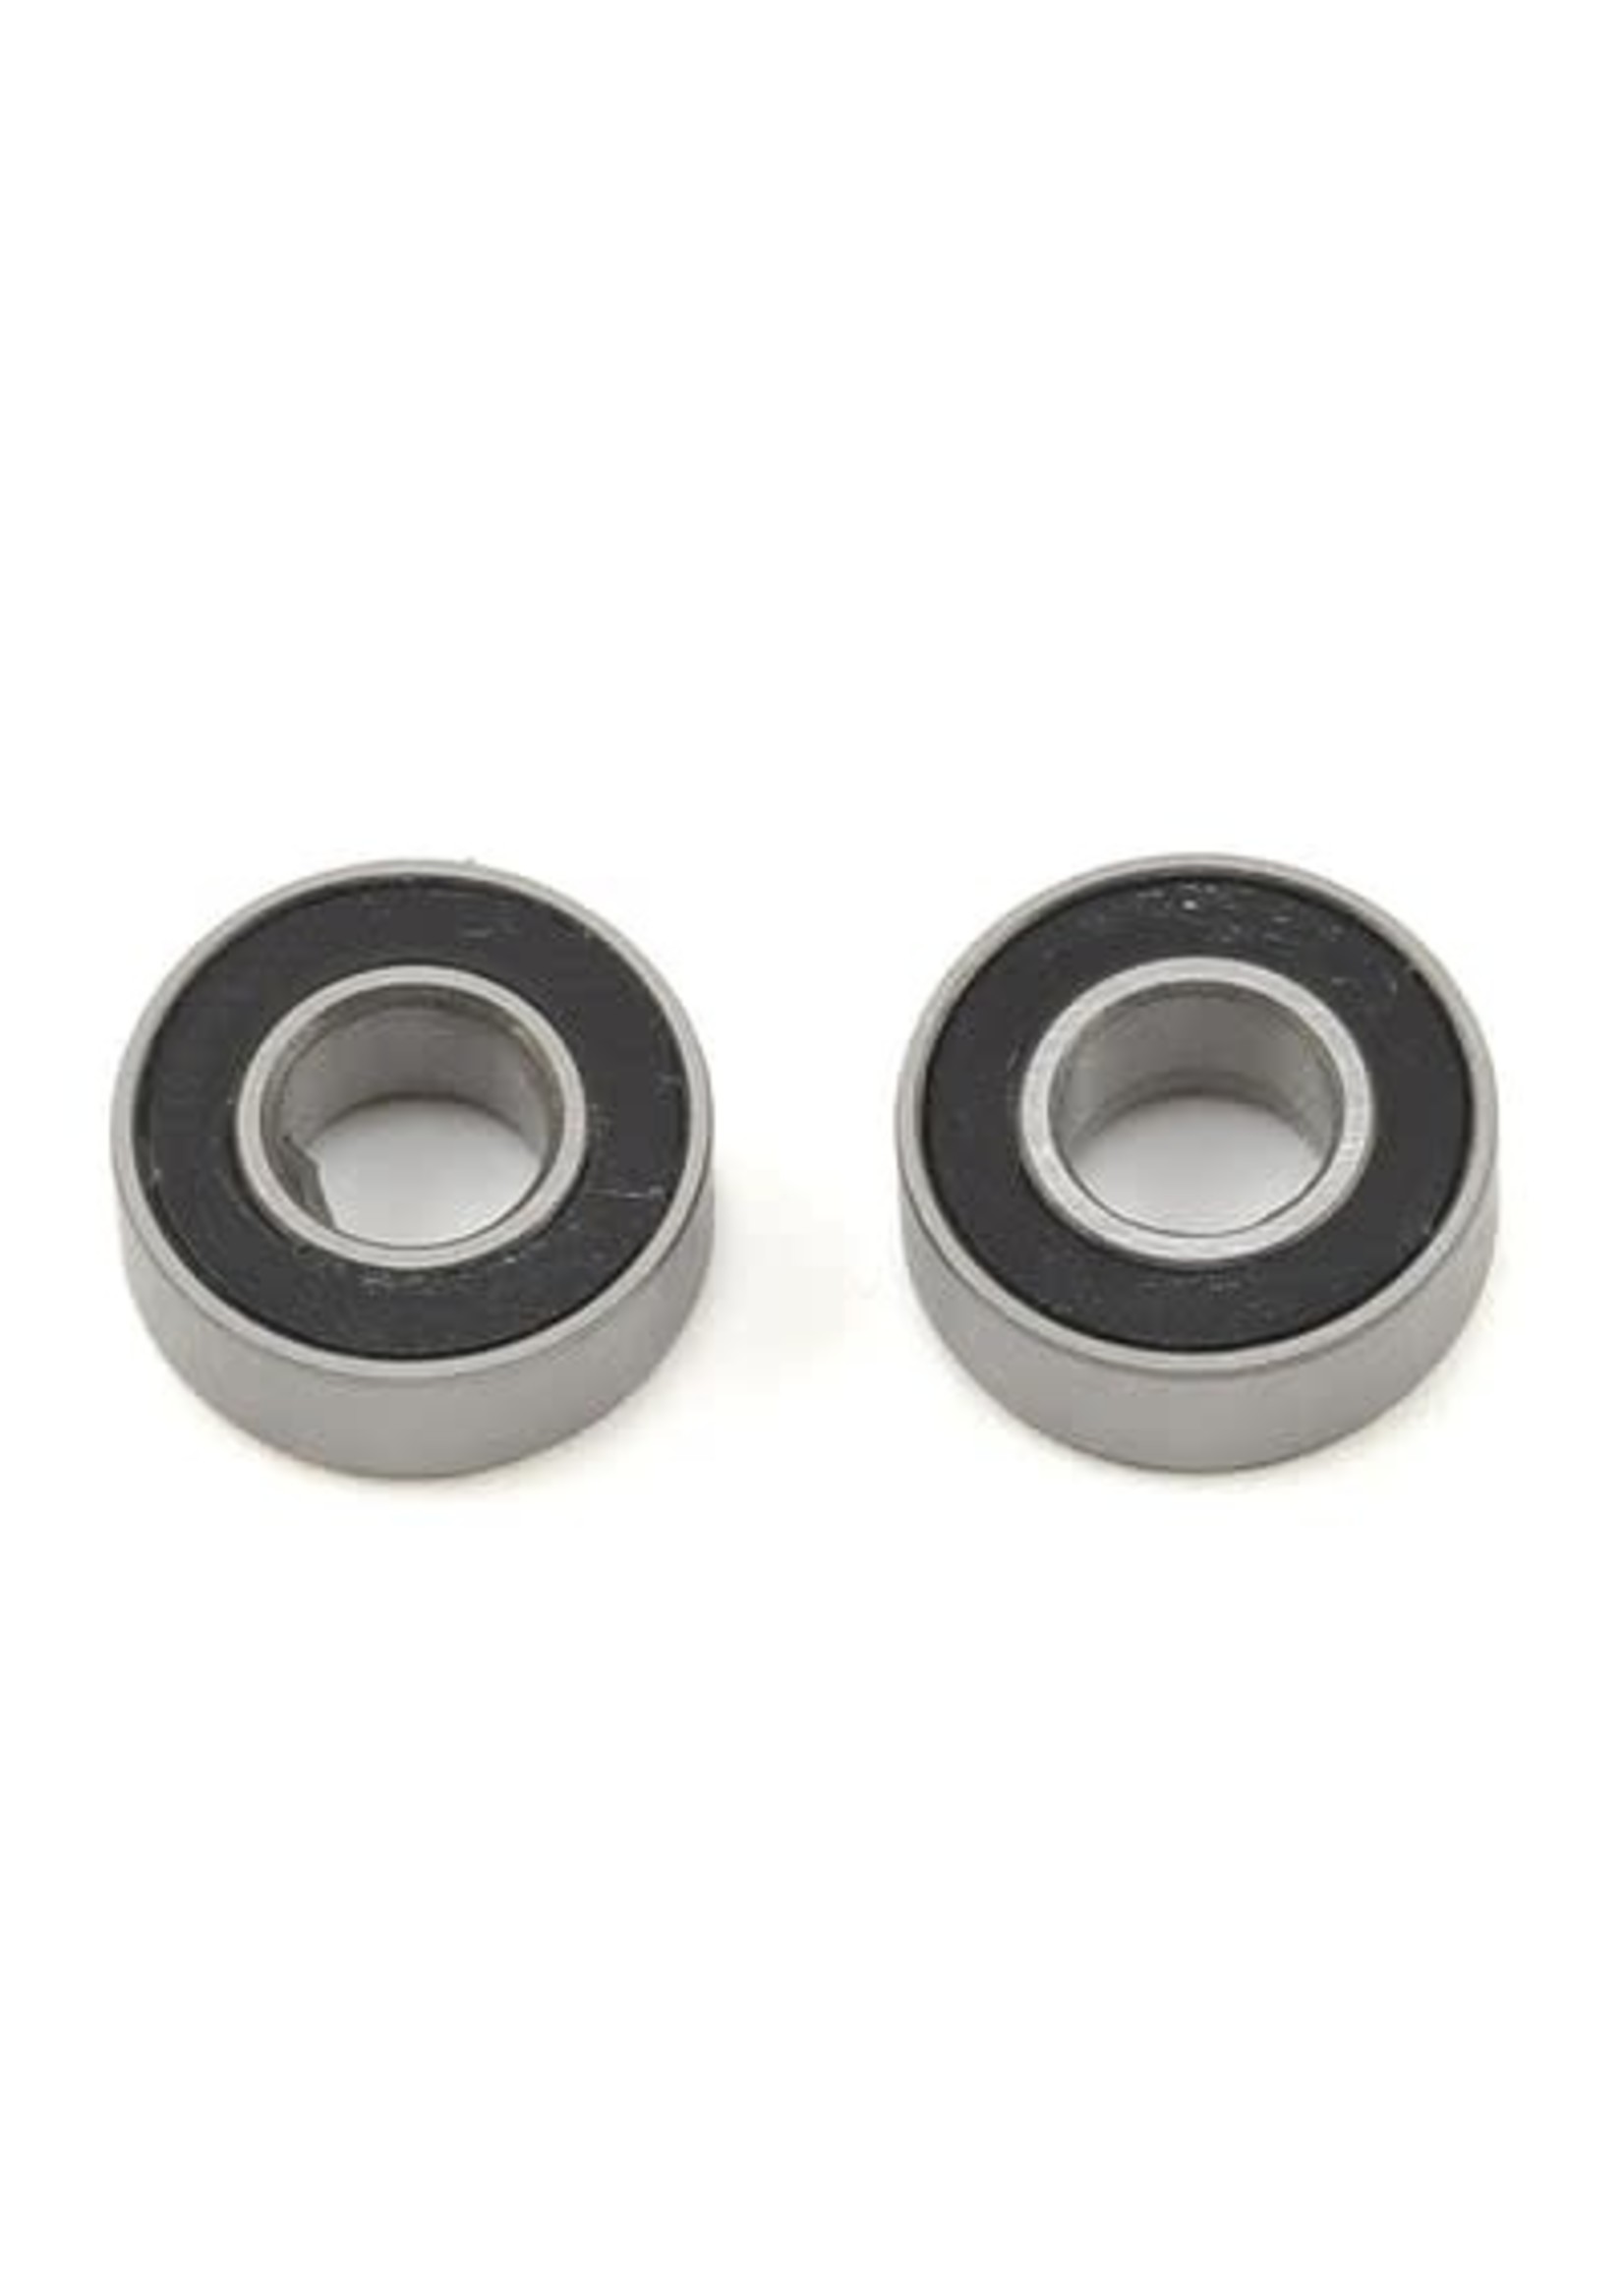 Traxxas 5116A Ball bearings, black rubber sealed (5x11x4mm) (2)